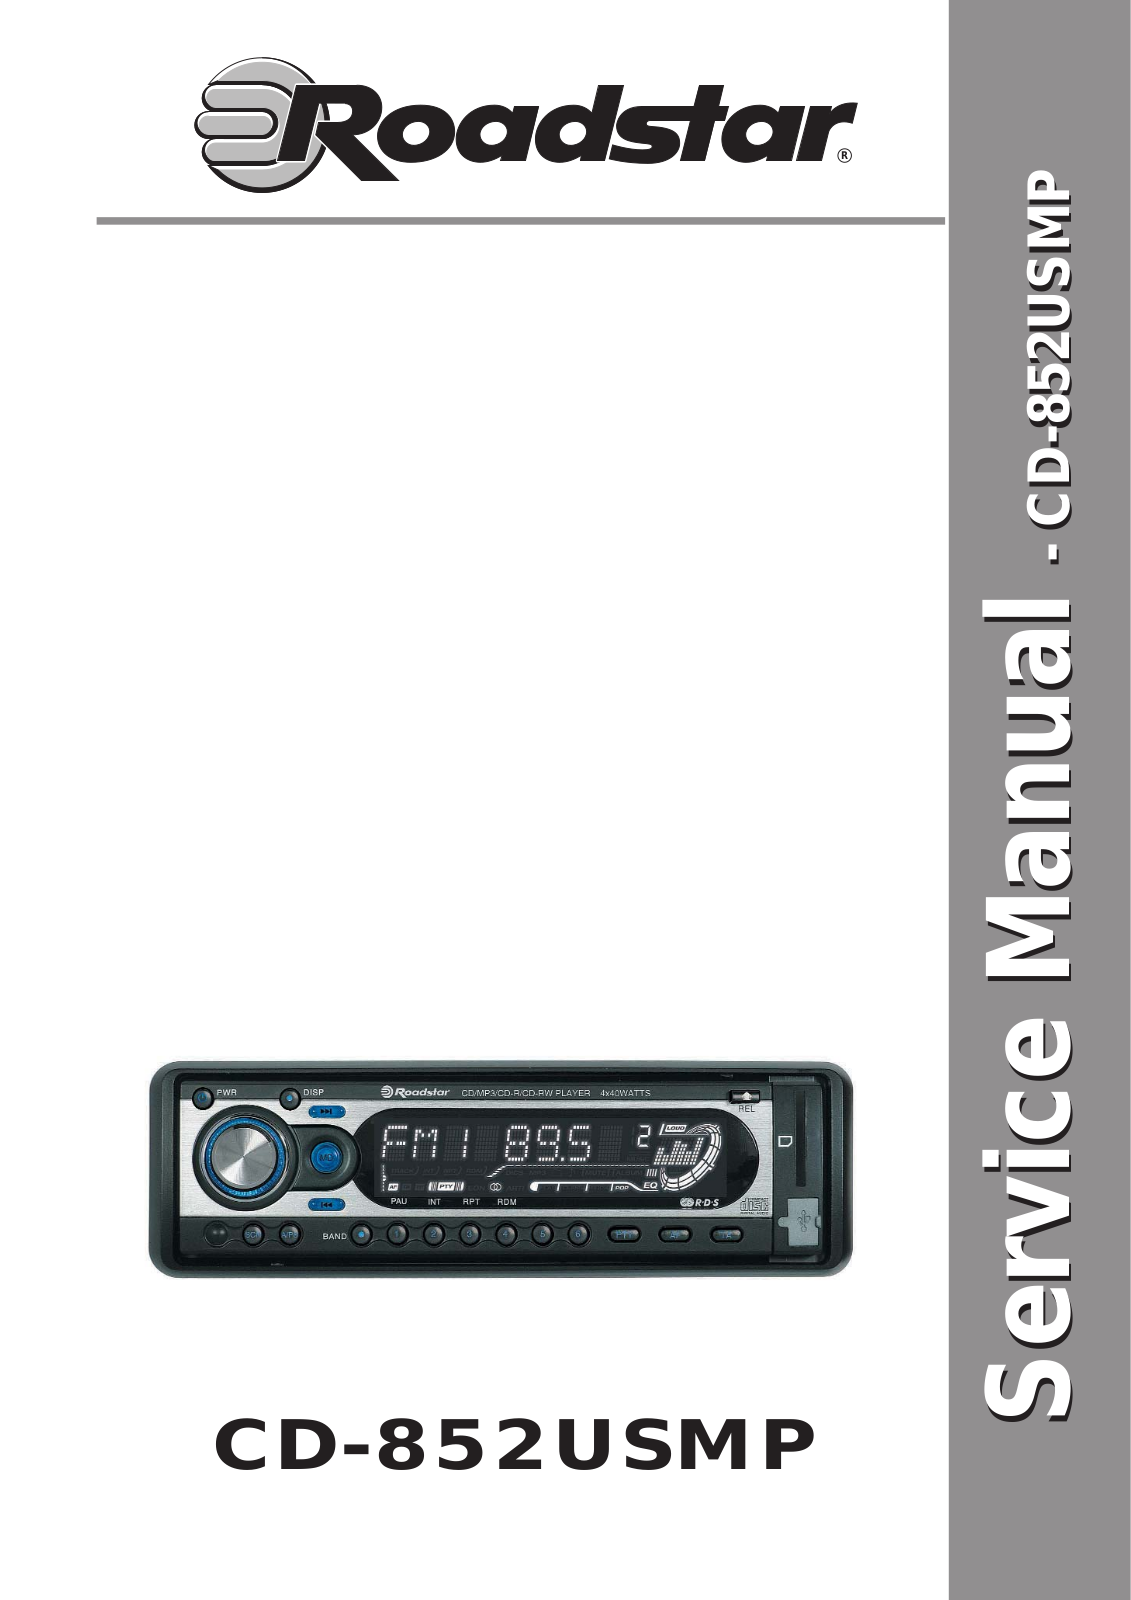 Roadstar CD-852USMP Service Manual